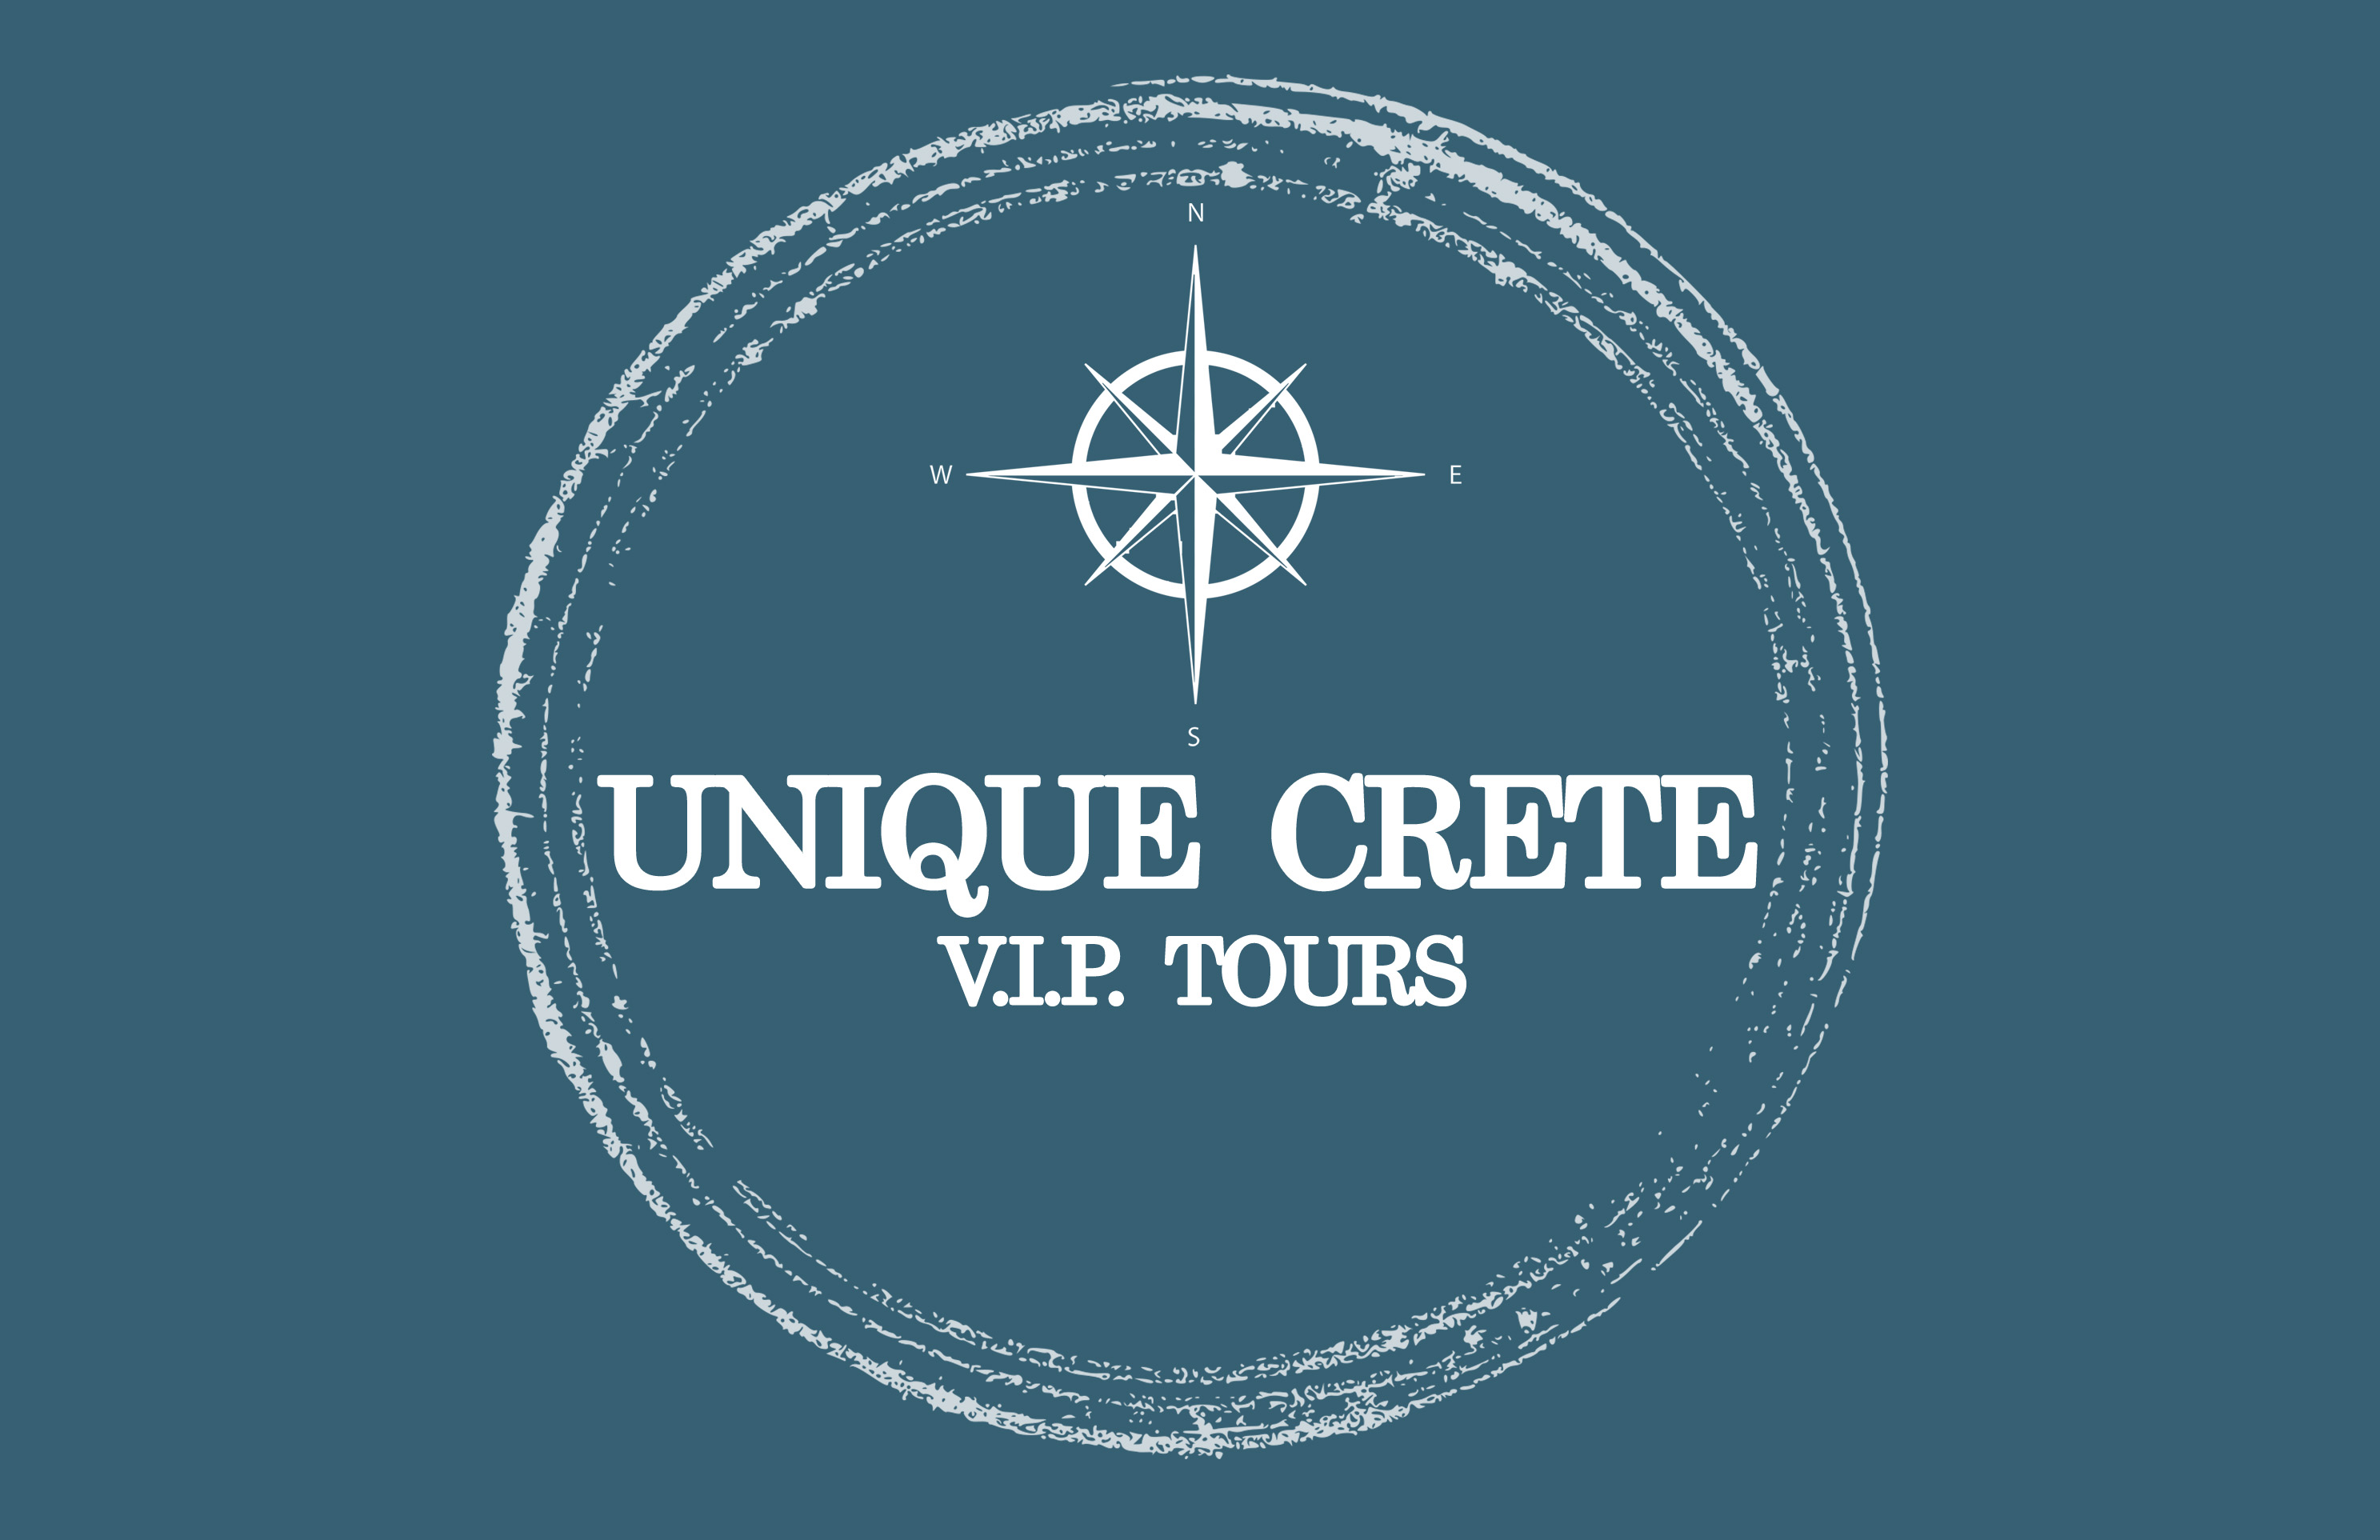 Unique Crete V.I.P. Tours